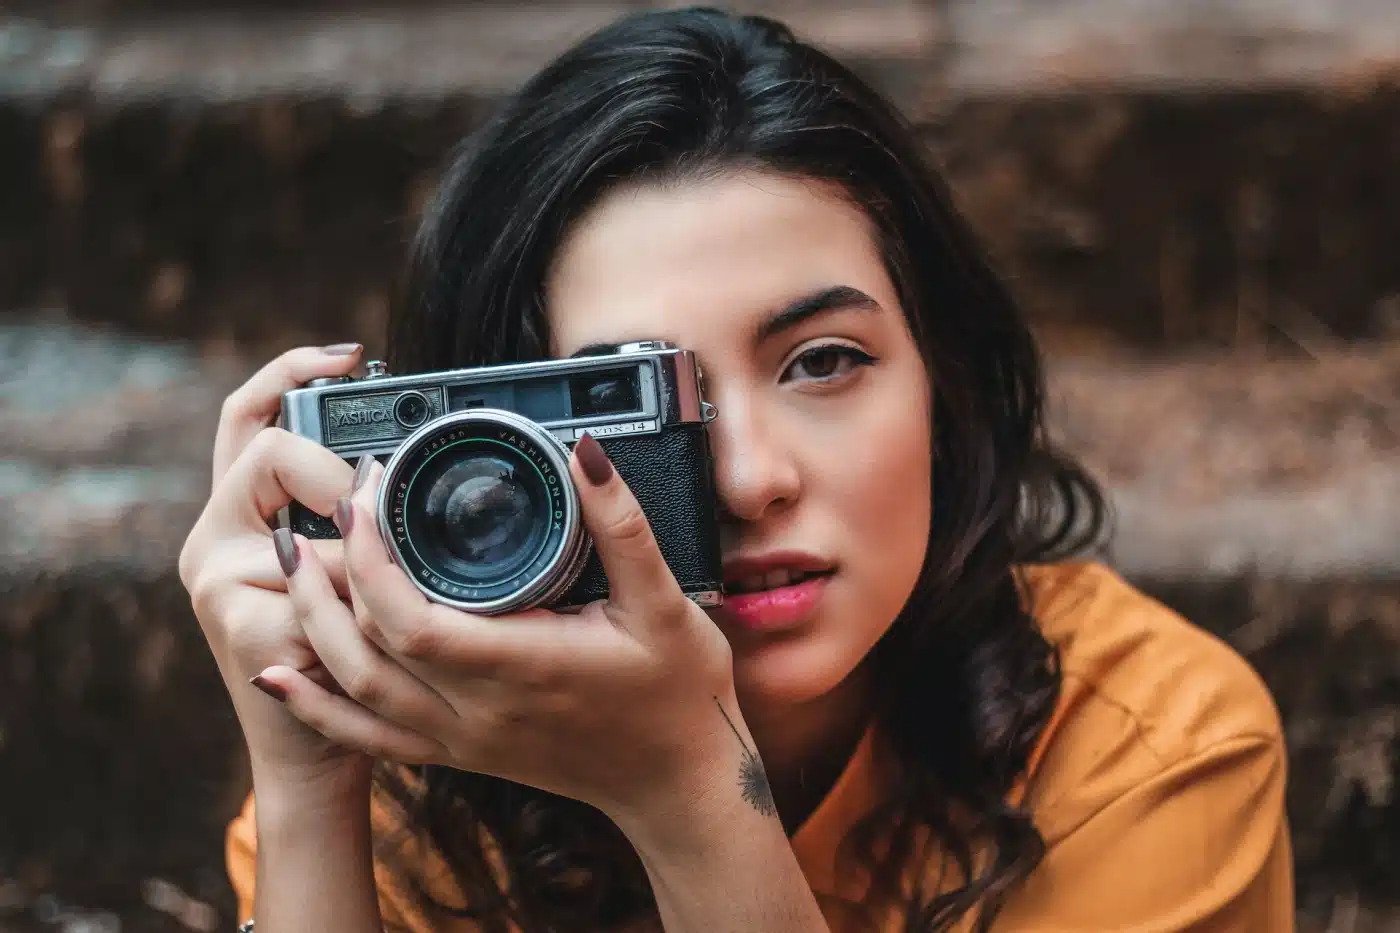 Yve Assad: The Nashville Photographer Shares Her Unique Journey